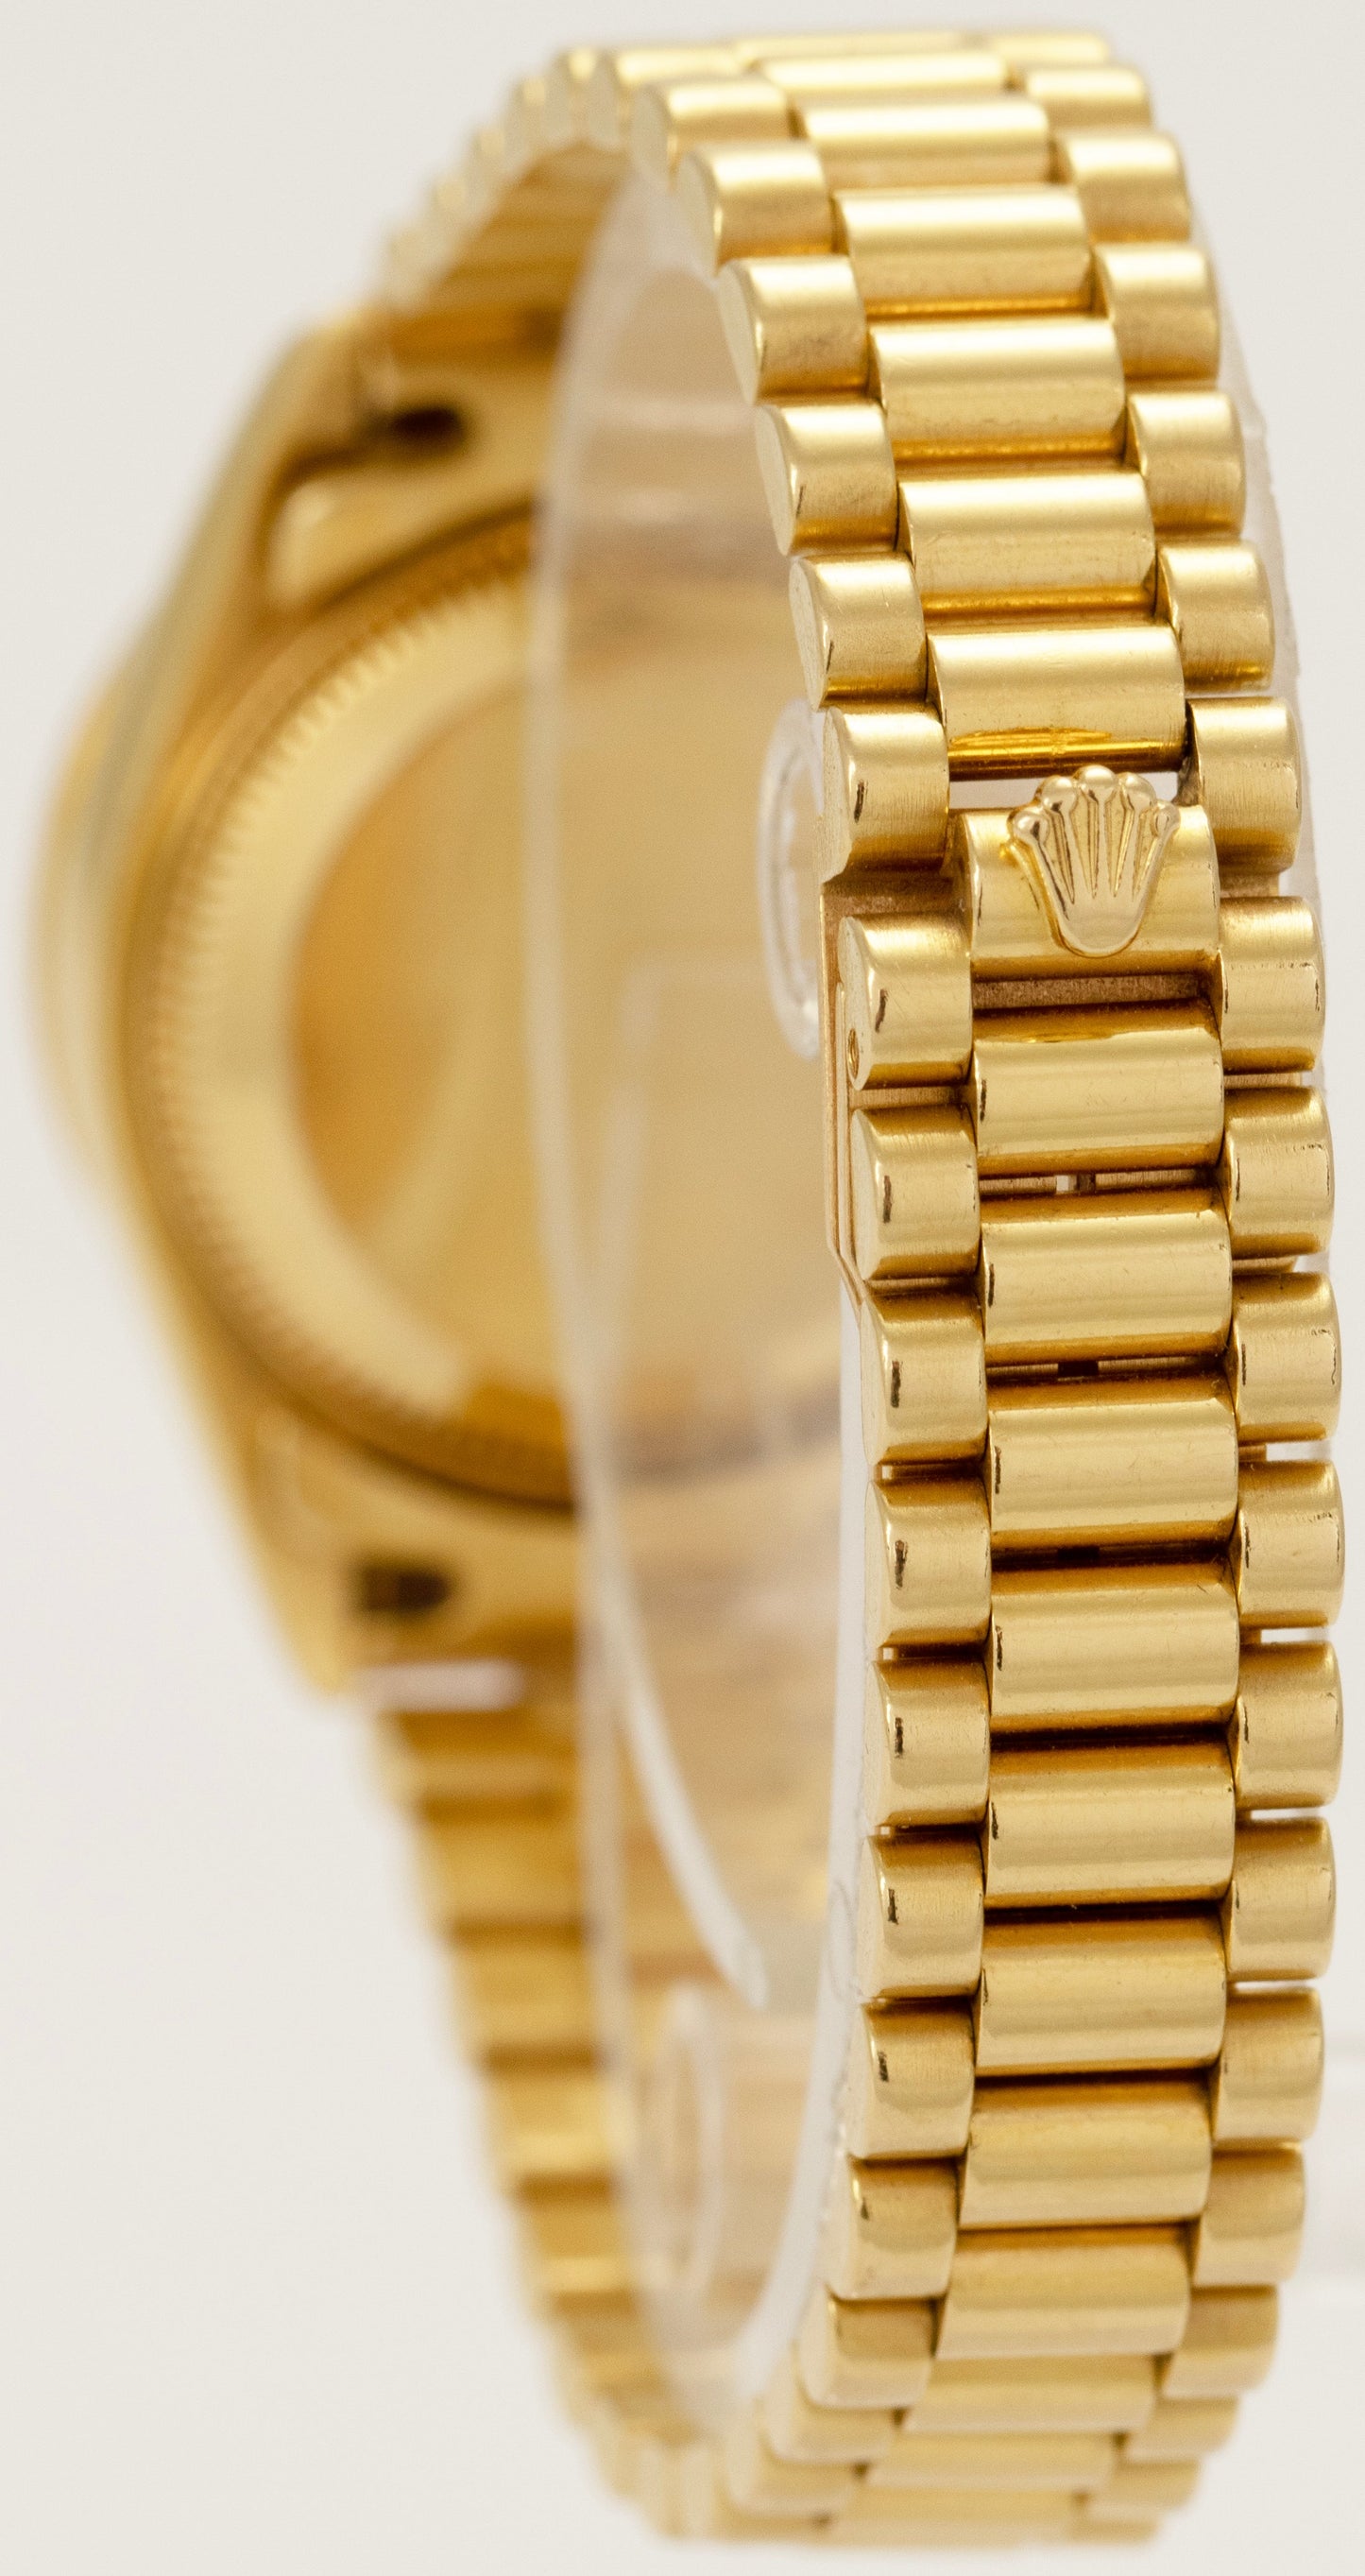 Ladies Rolex DateJust President 69178 26mm DIAMOND Champagne 18K Gold Watch